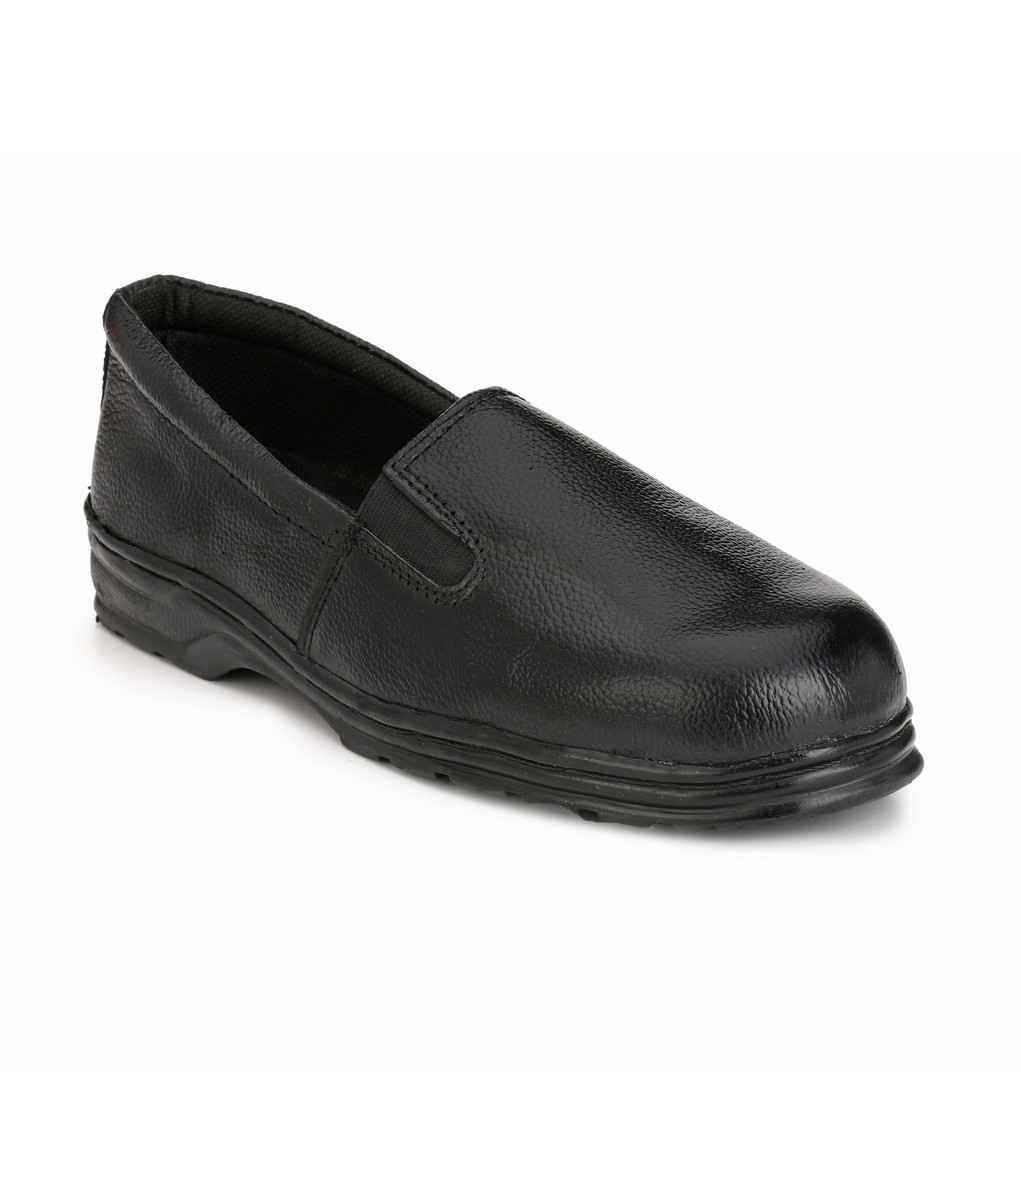 moglix safety shoes